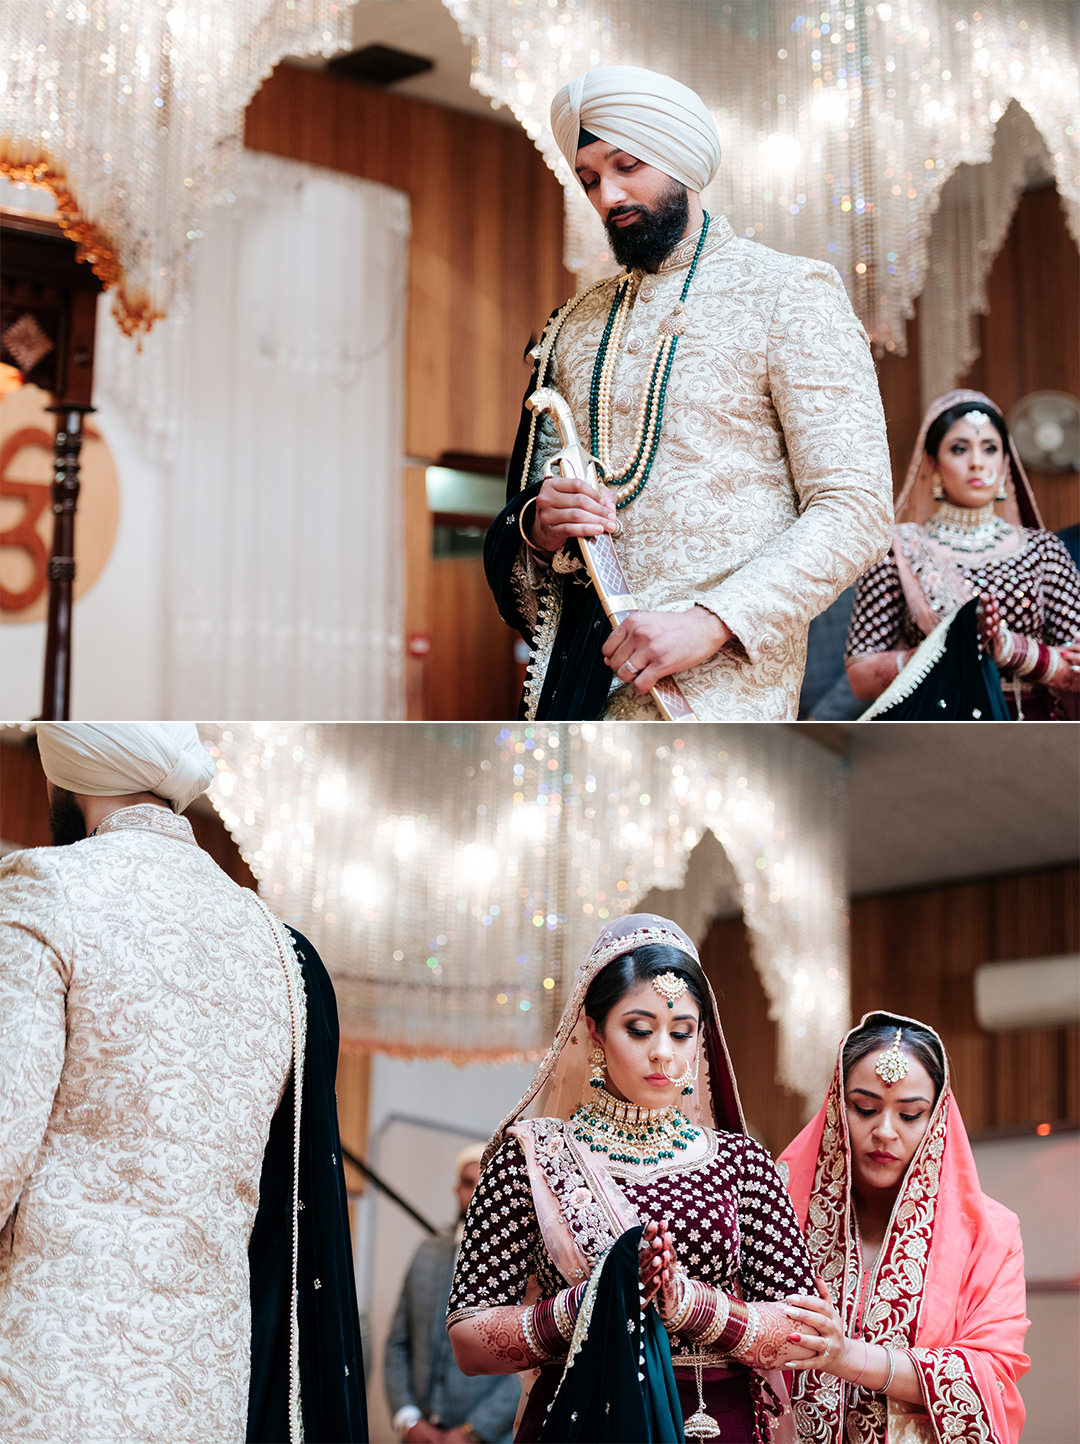 Ramgarhia Sabha Southall Gurdwara Sikh Wedding